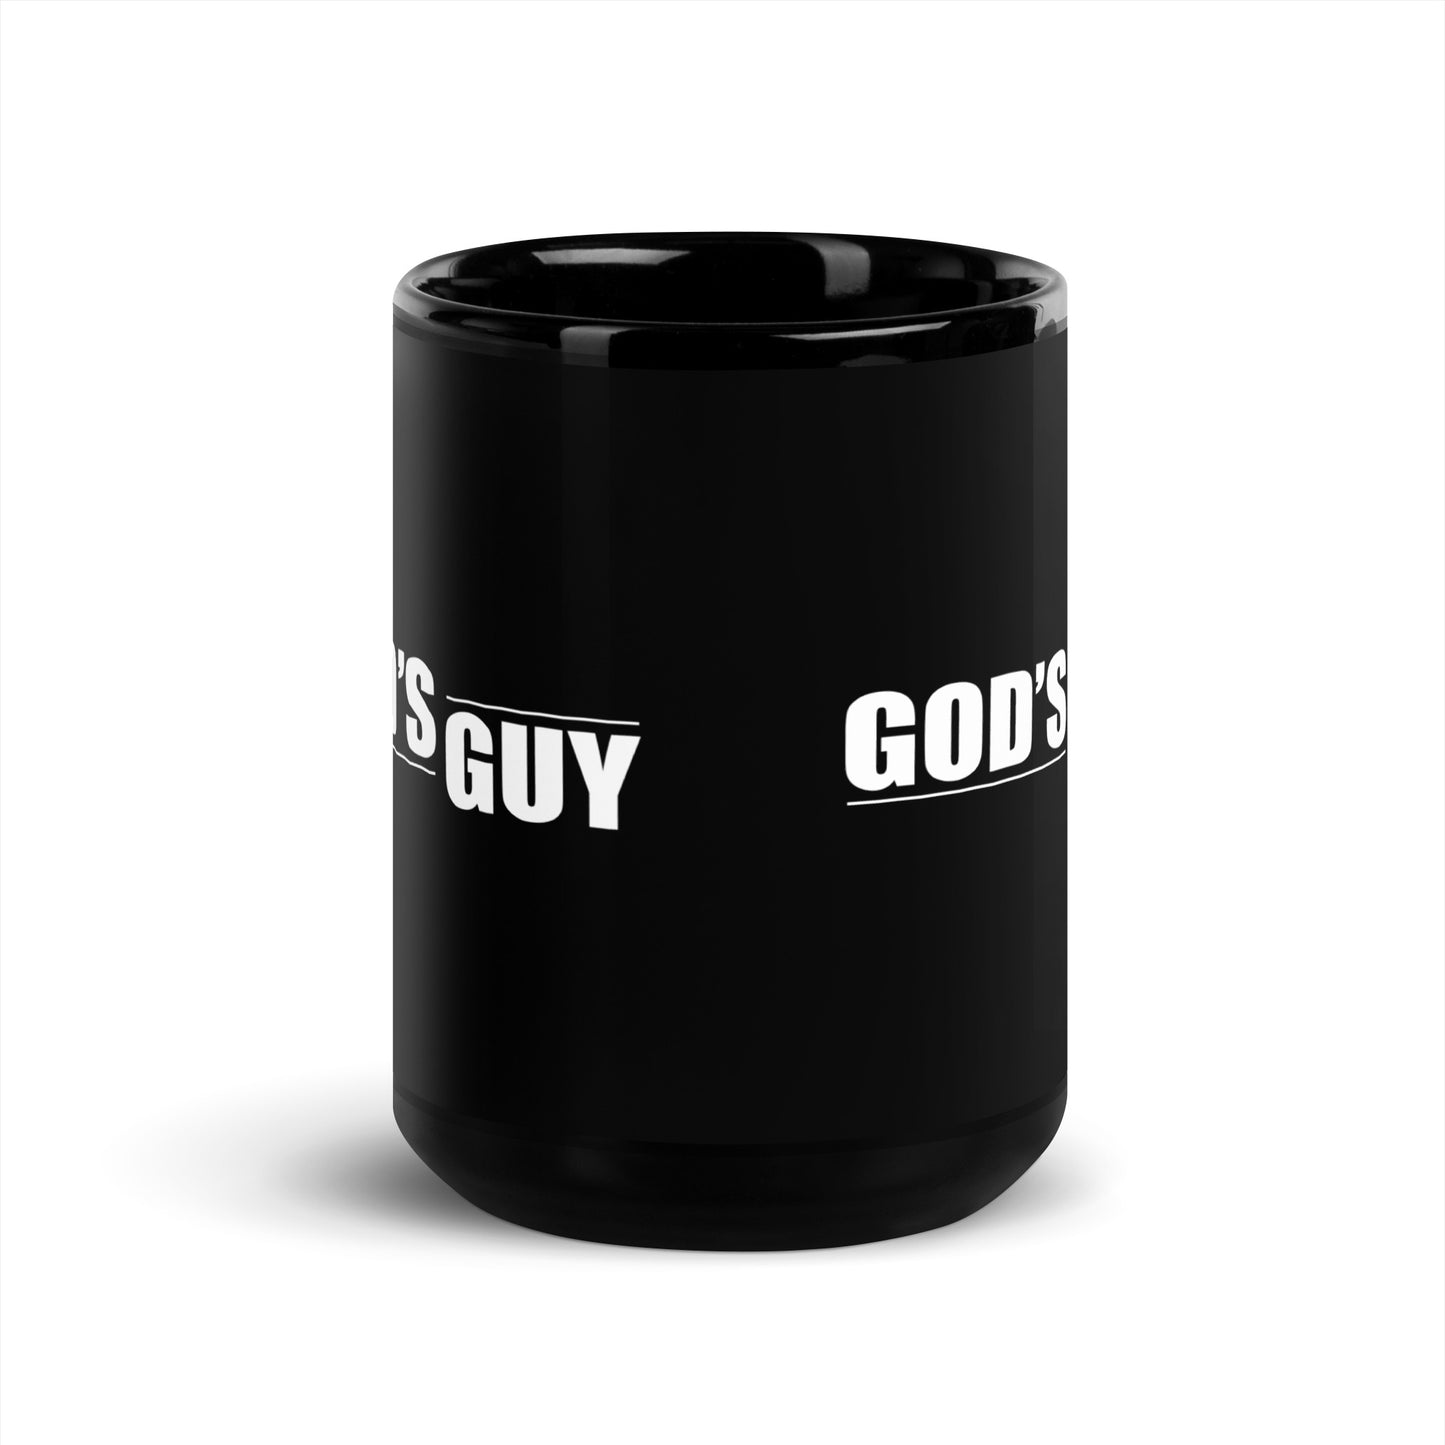 "God's Guy" Black Glossy Mug